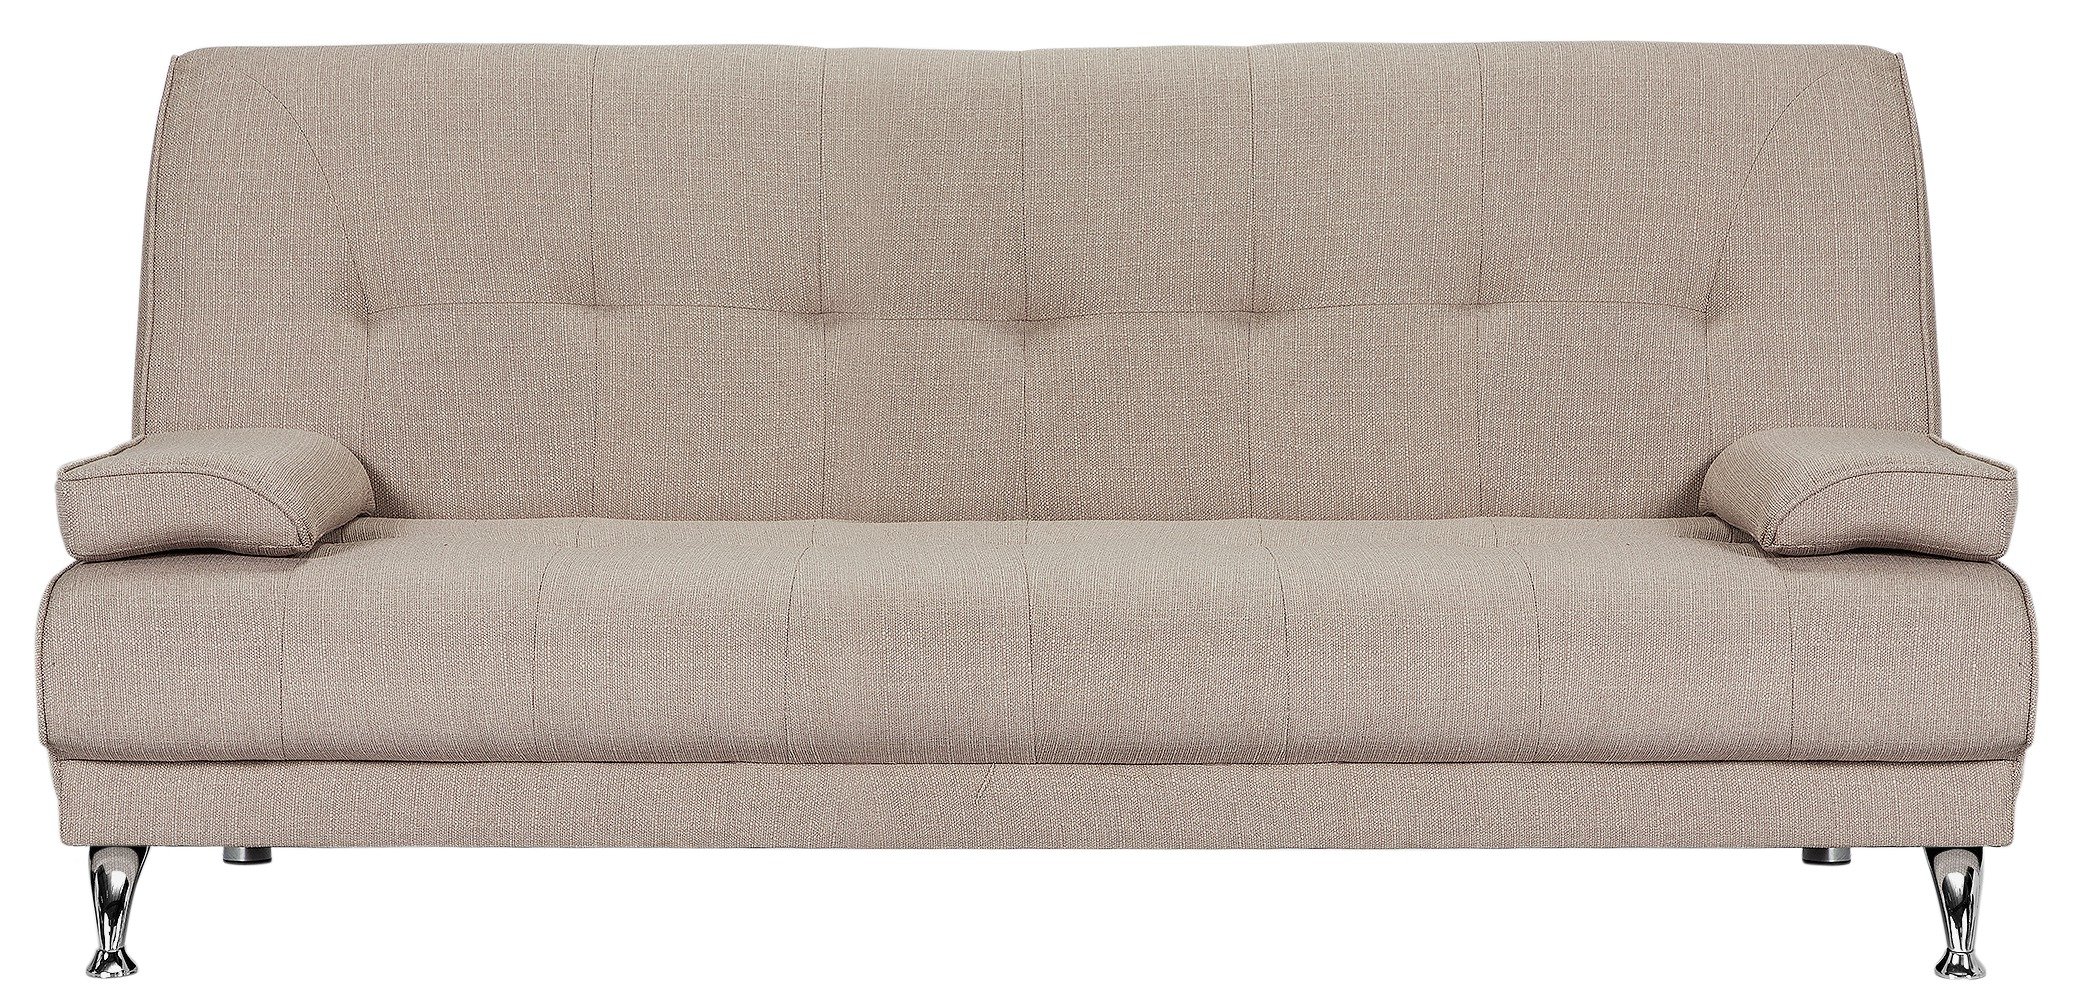 Buy Argos Home Sicily 2 Seater Clic Clac Sofa Bed - Natural | Sofa